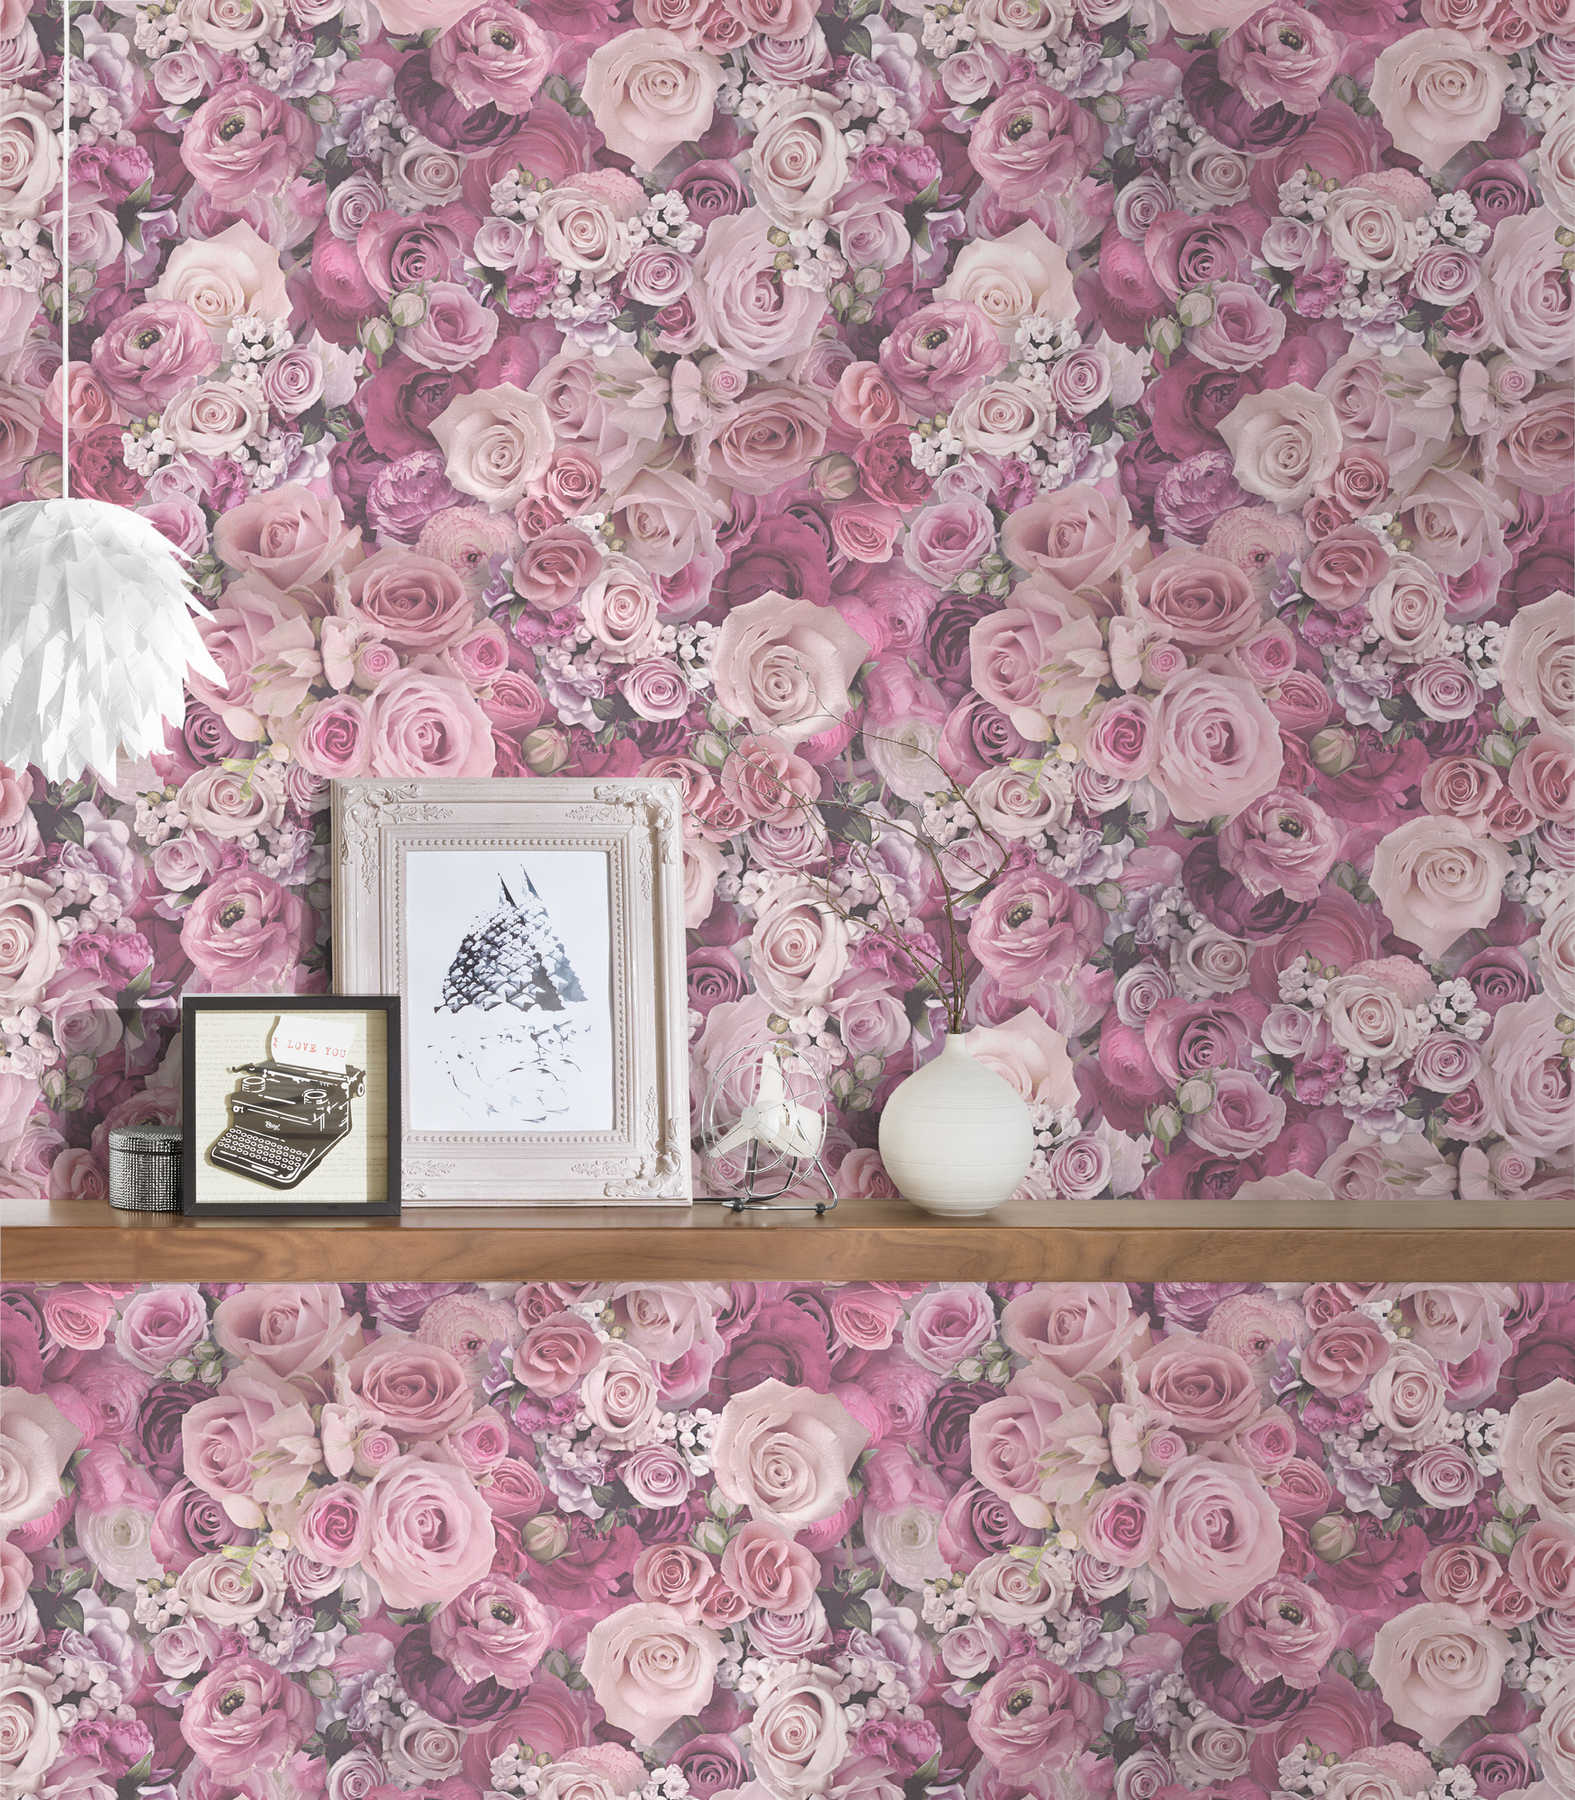             3D non-woven wallpaper roses flowers motif - purple
        